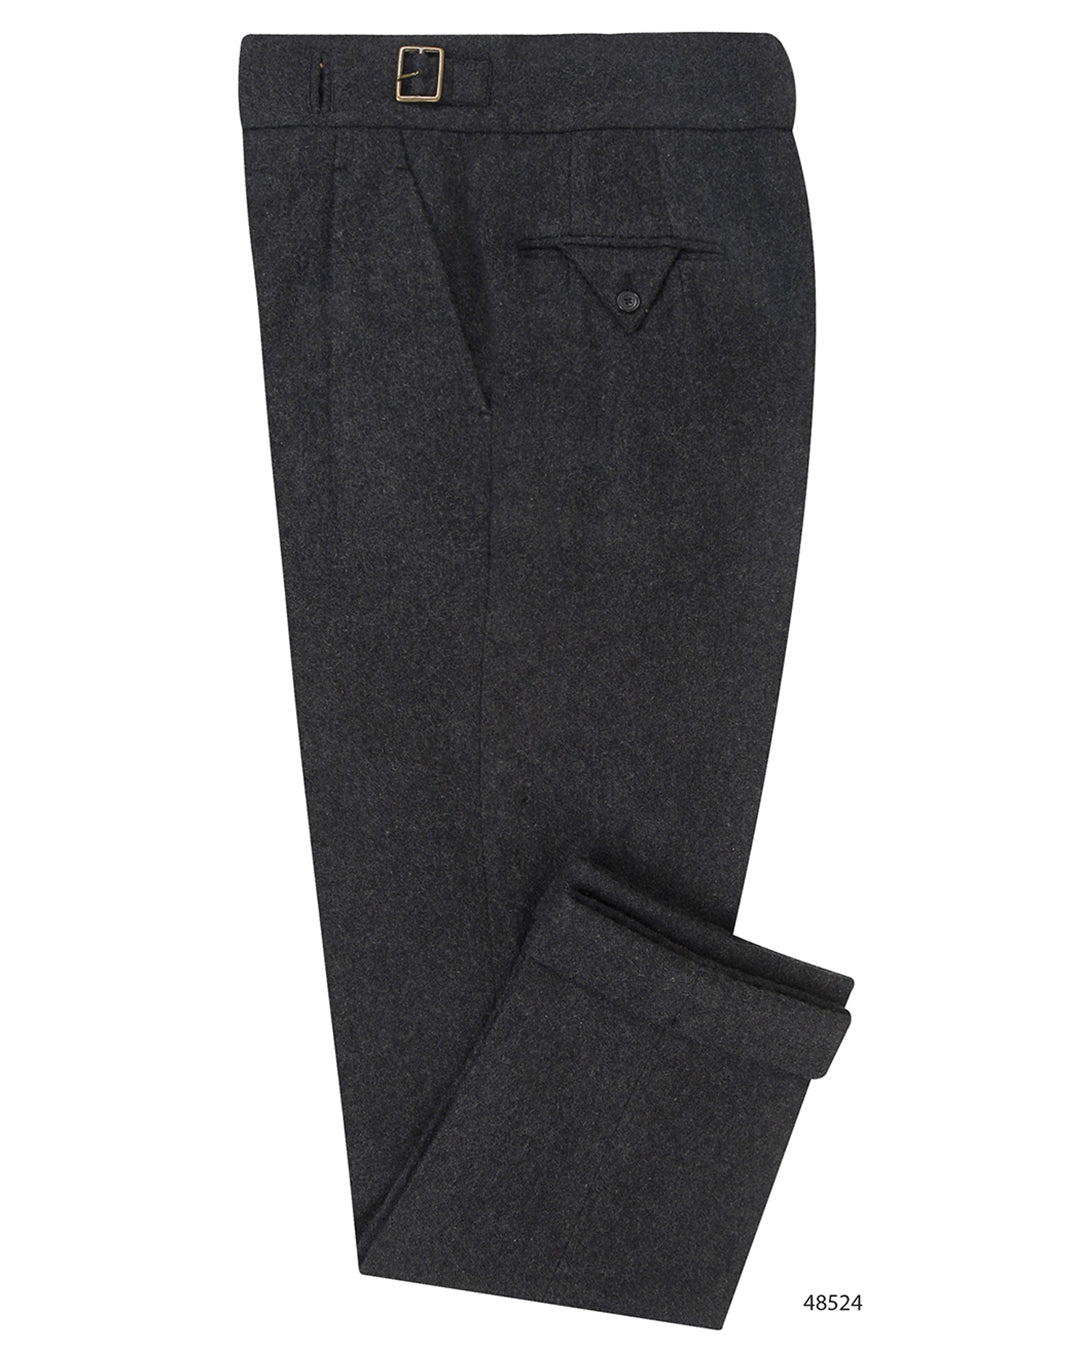 Gurkha Pant in Charcoal Grey 100% Wool Flannel